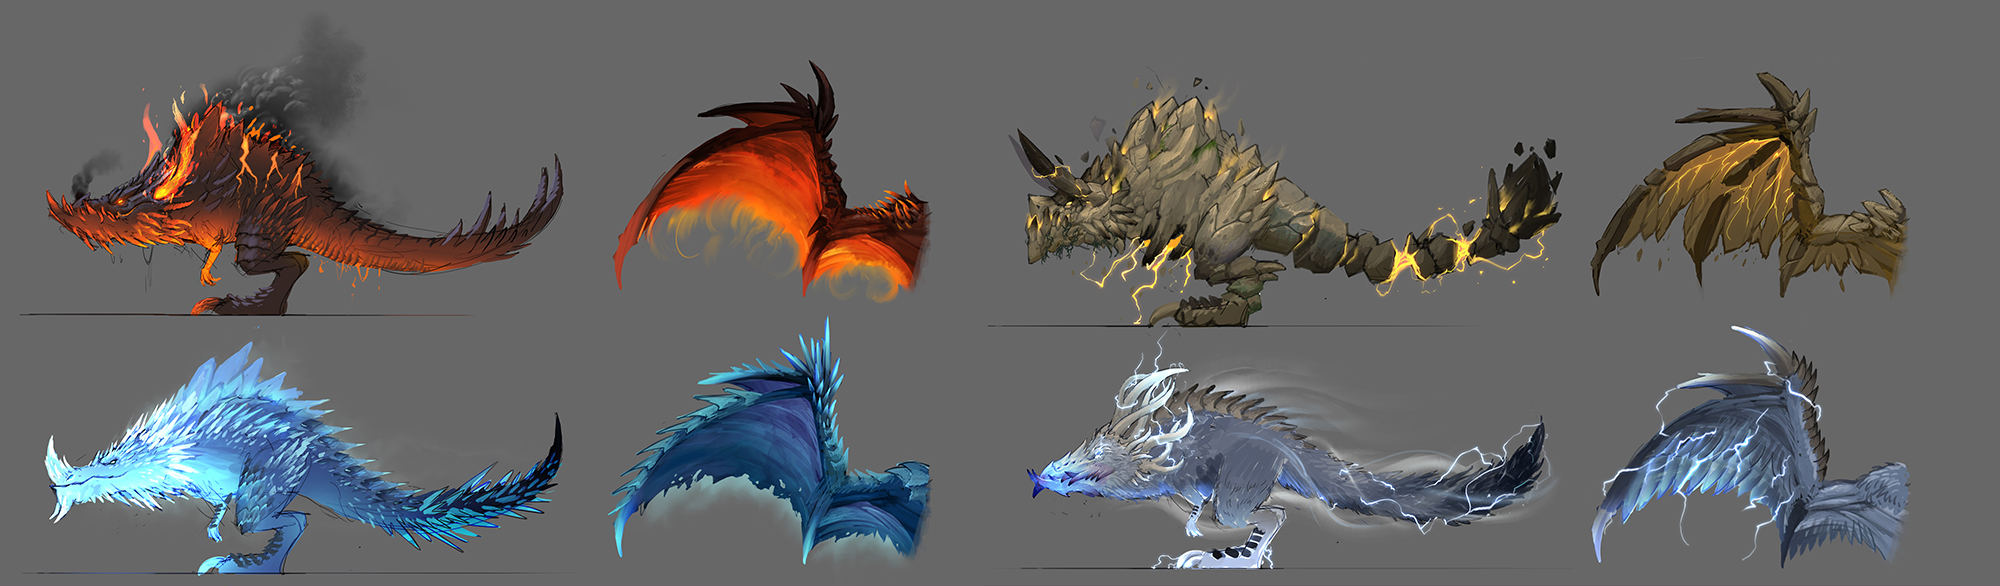 Dragonflight : Artwork de proto-dragons élémentaires